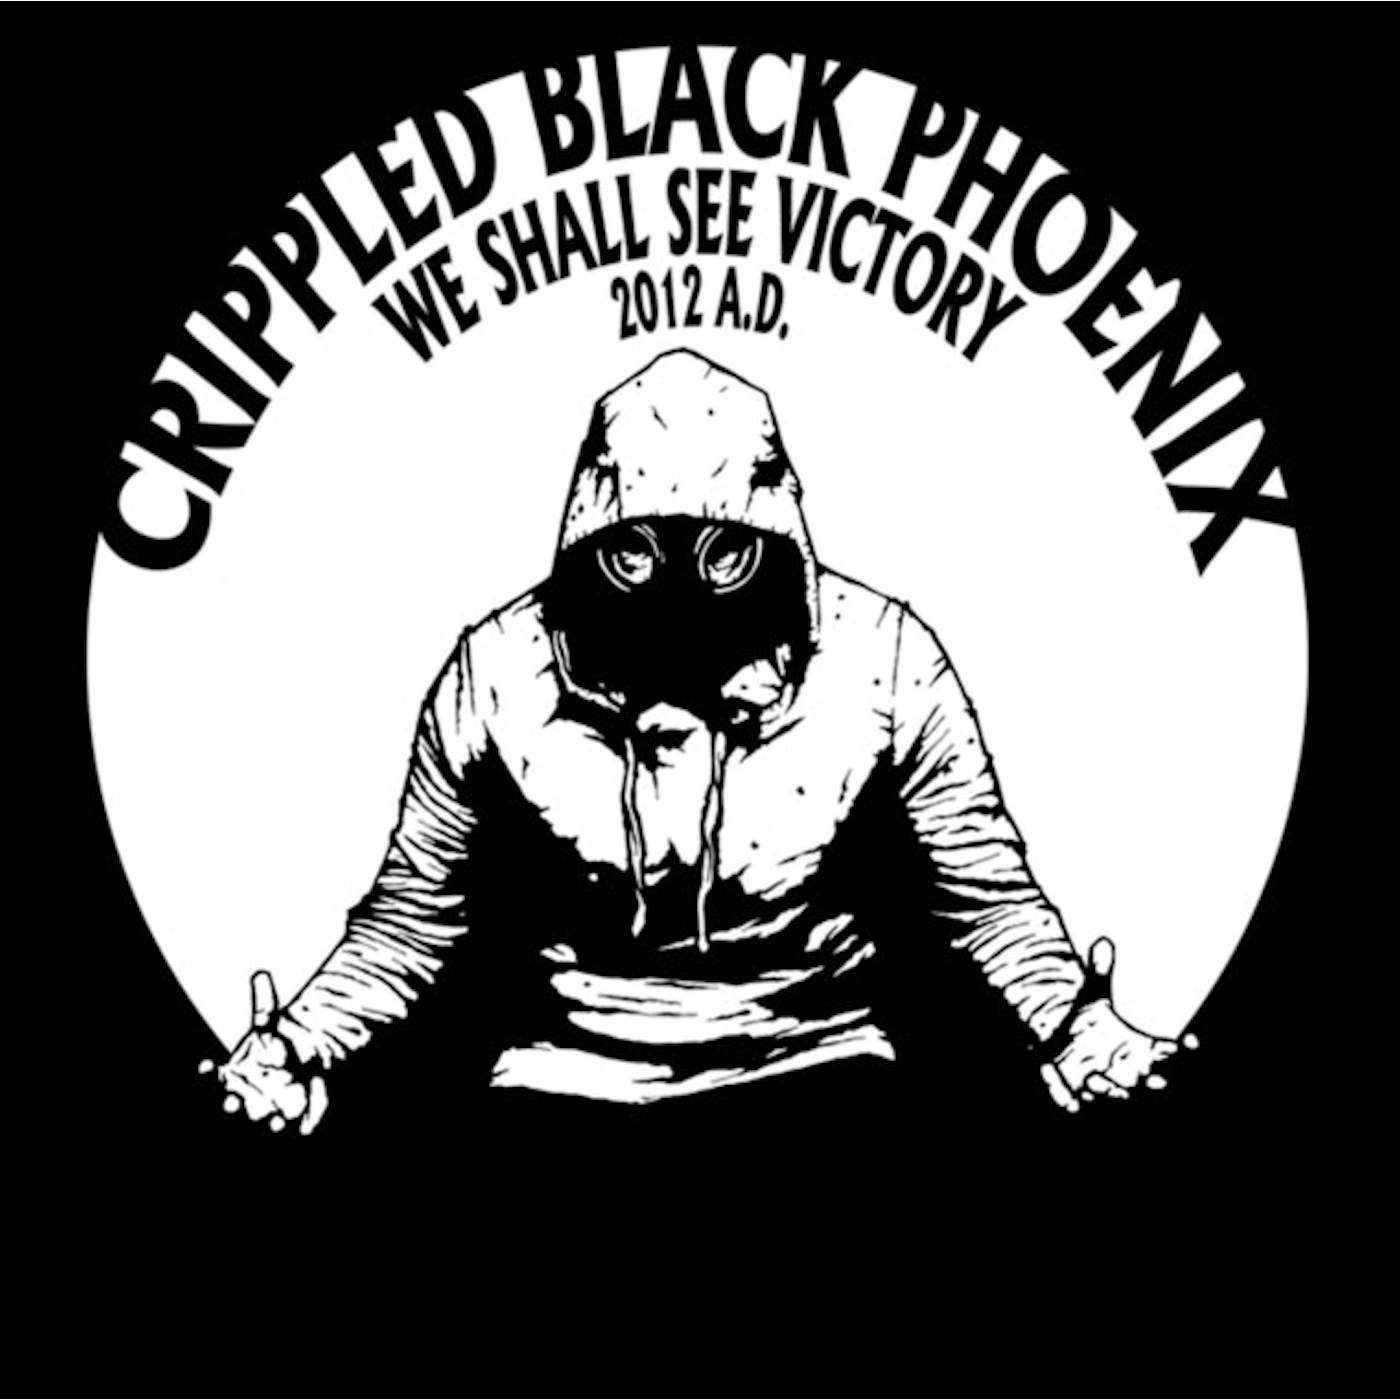 Crippled Black Phoenix CD - We Shall See Victory